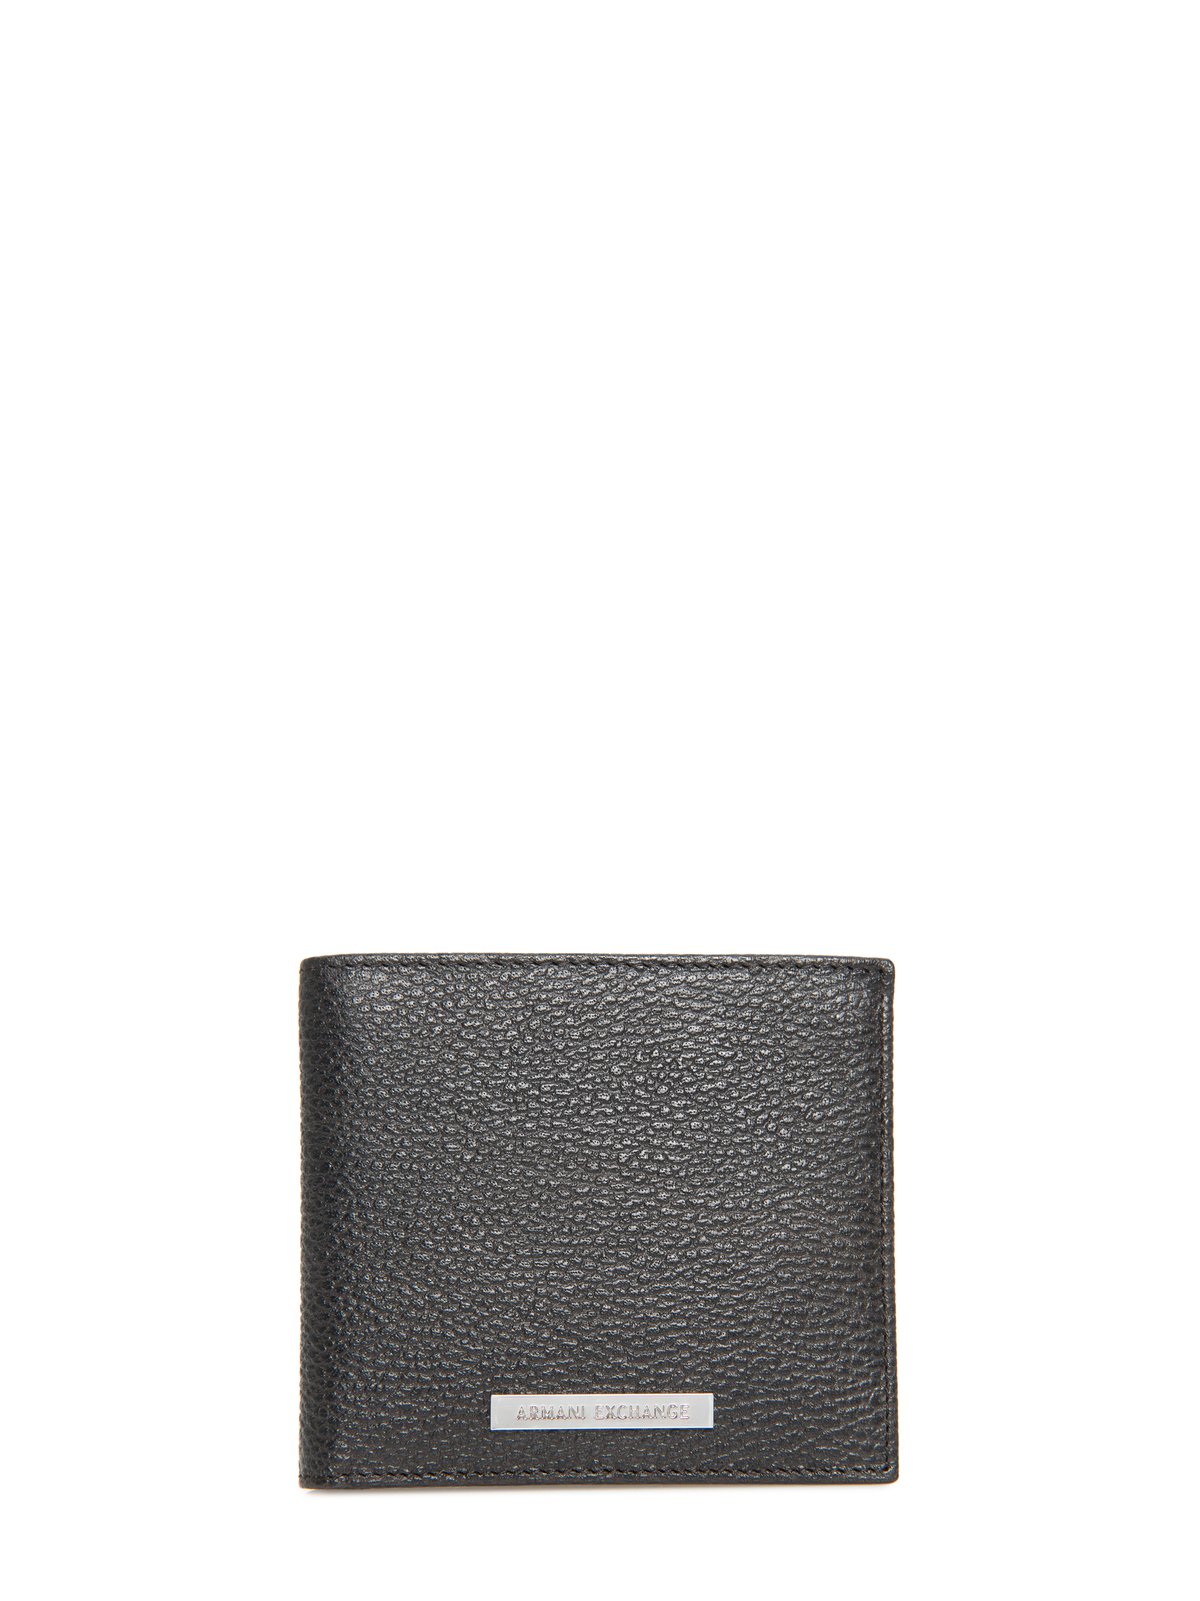 Men's leather wallet Armani Exchange 